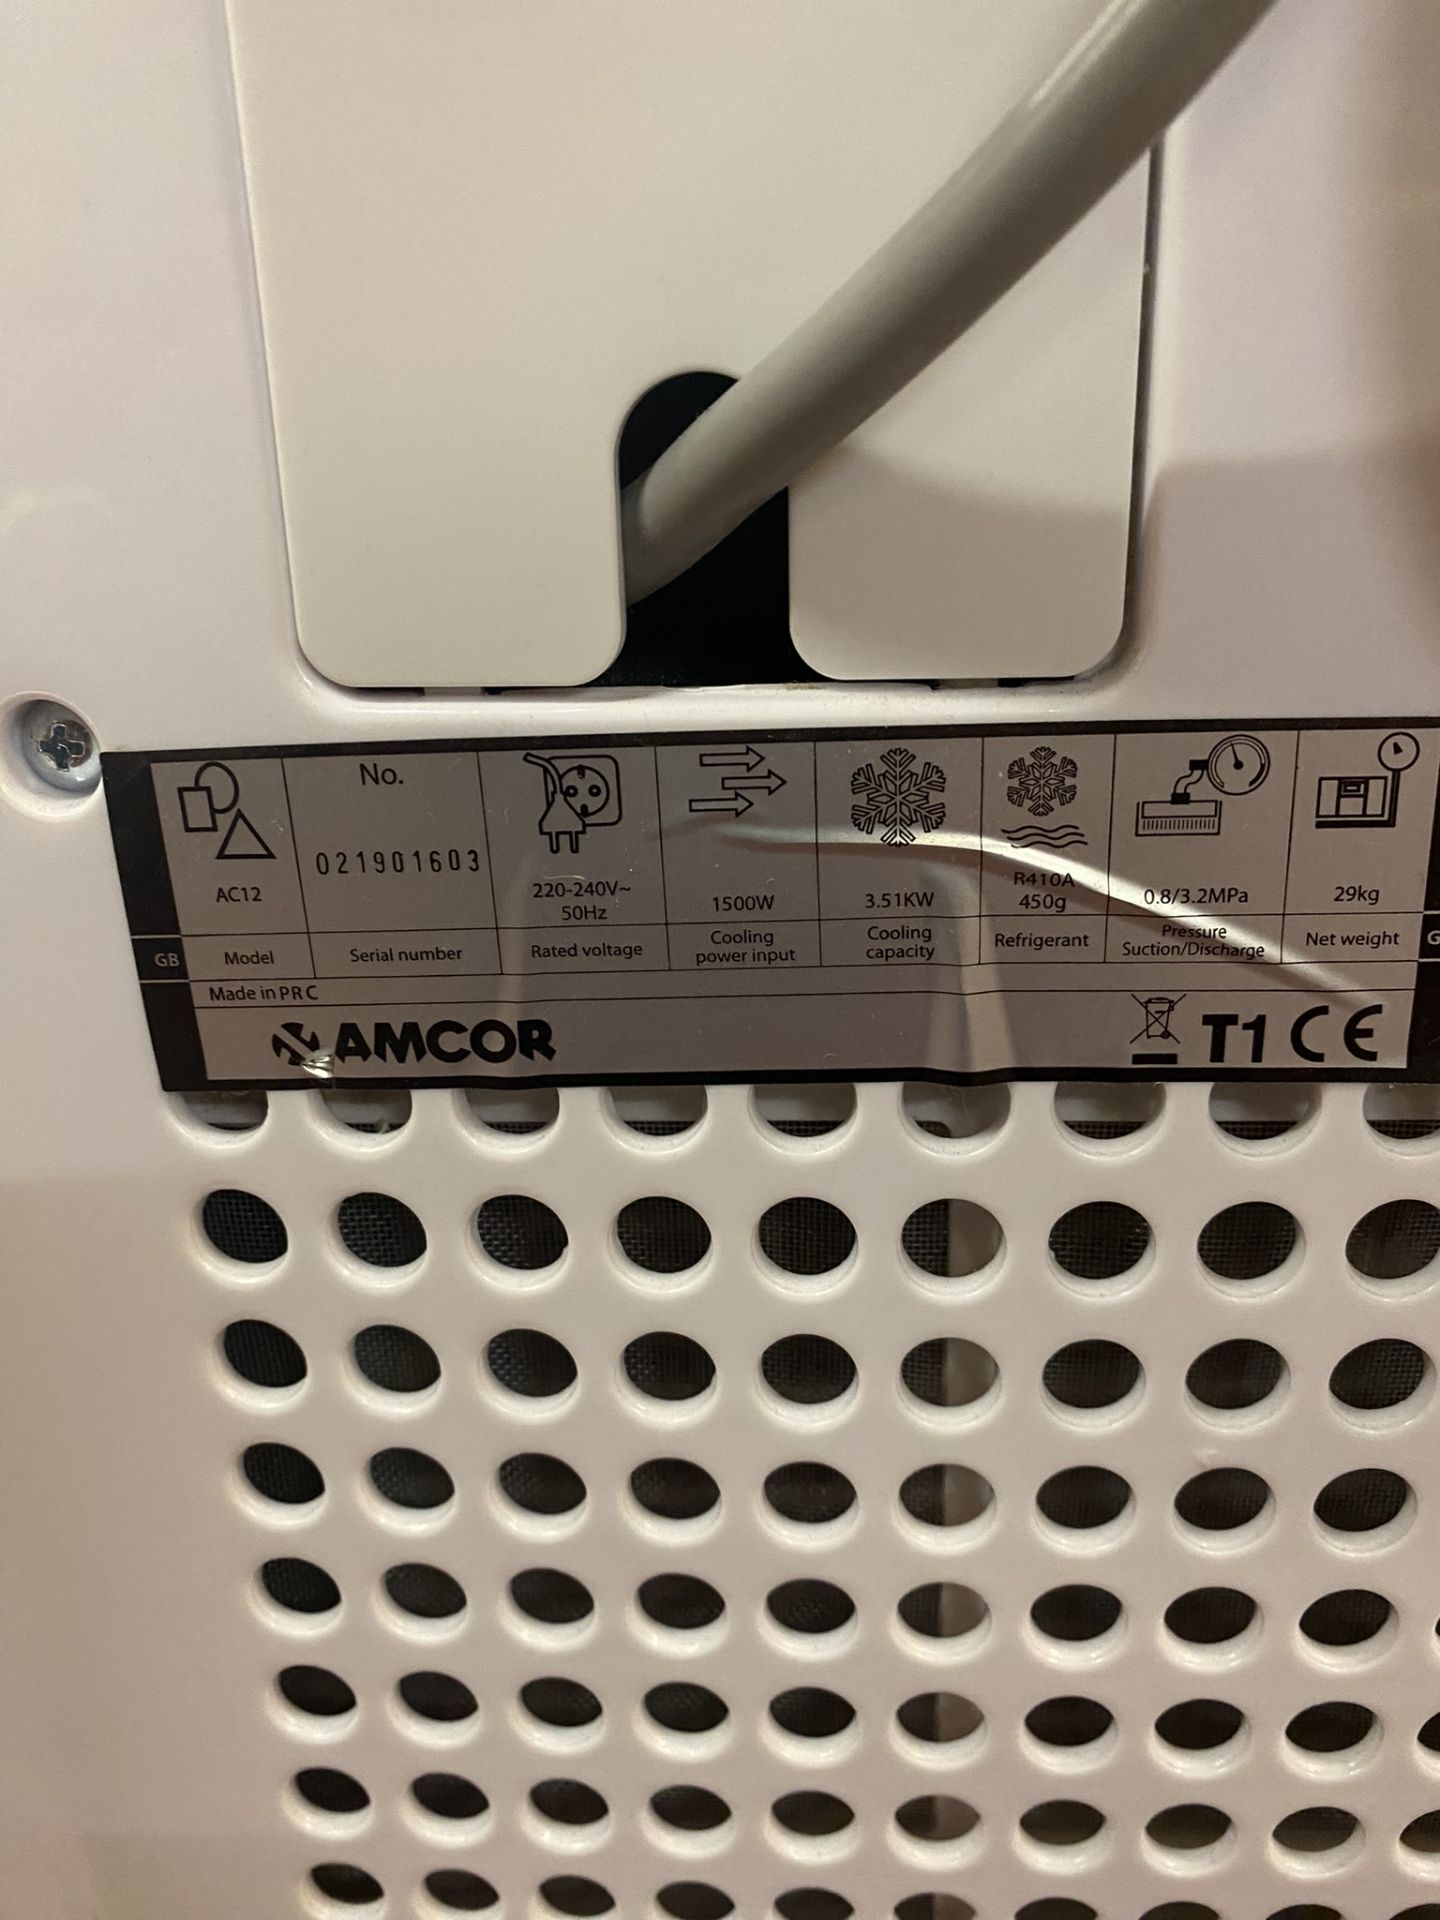 Amcor AC12 12000 BTU Portable Air Conditioning Unit Mobile Air Conditioner - White - Image 4 of 4